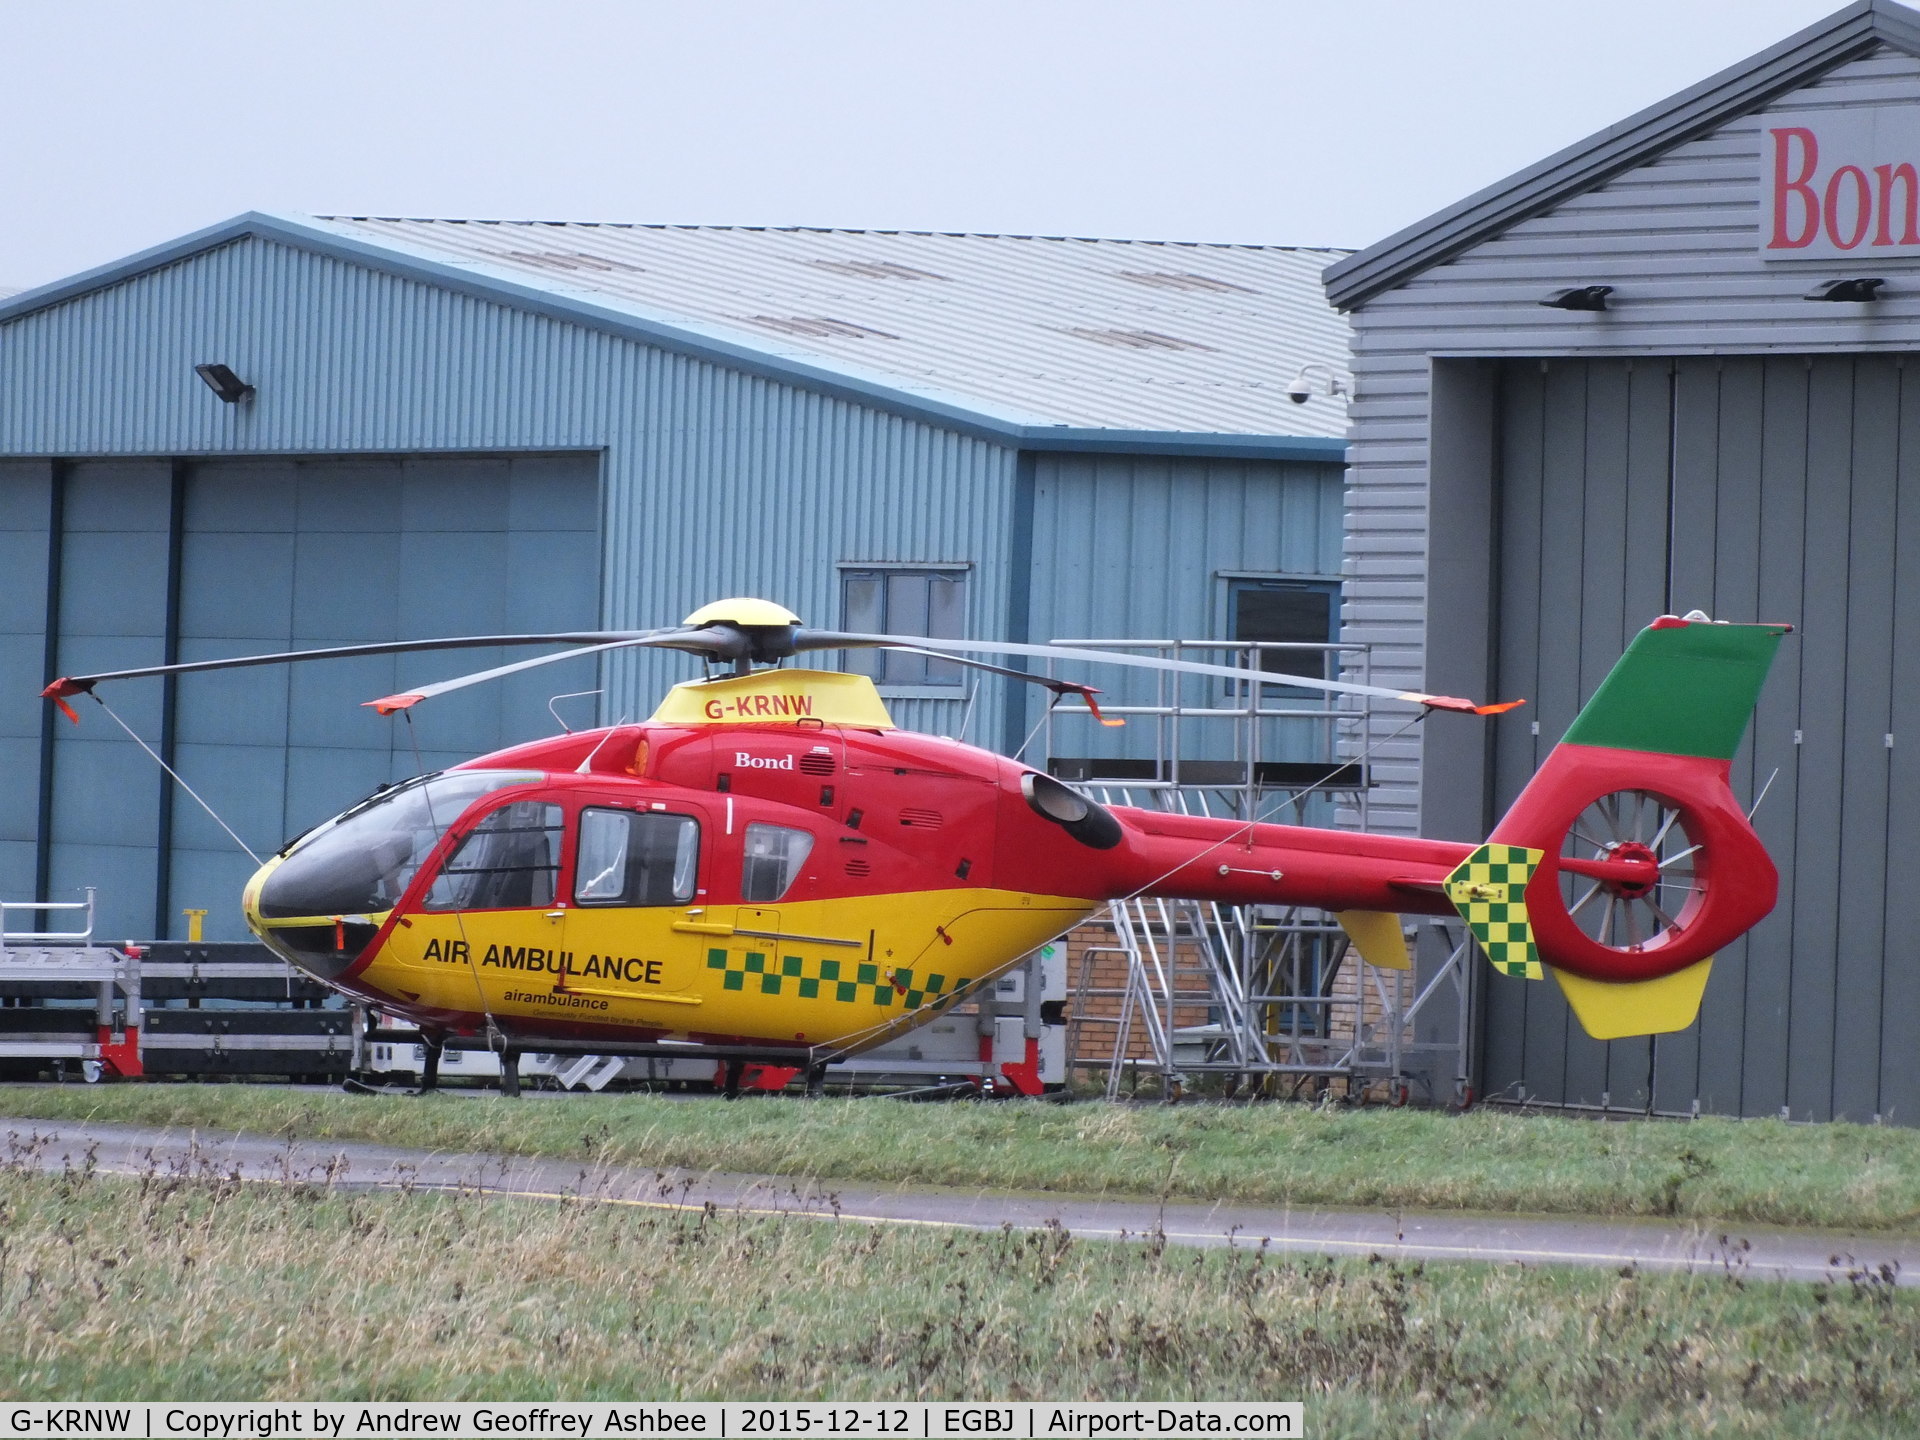 G-KRNW, 2001 Eurocopter EC-135T-2 C/N 0175, G-KRNW at Gloucestershire Airport.